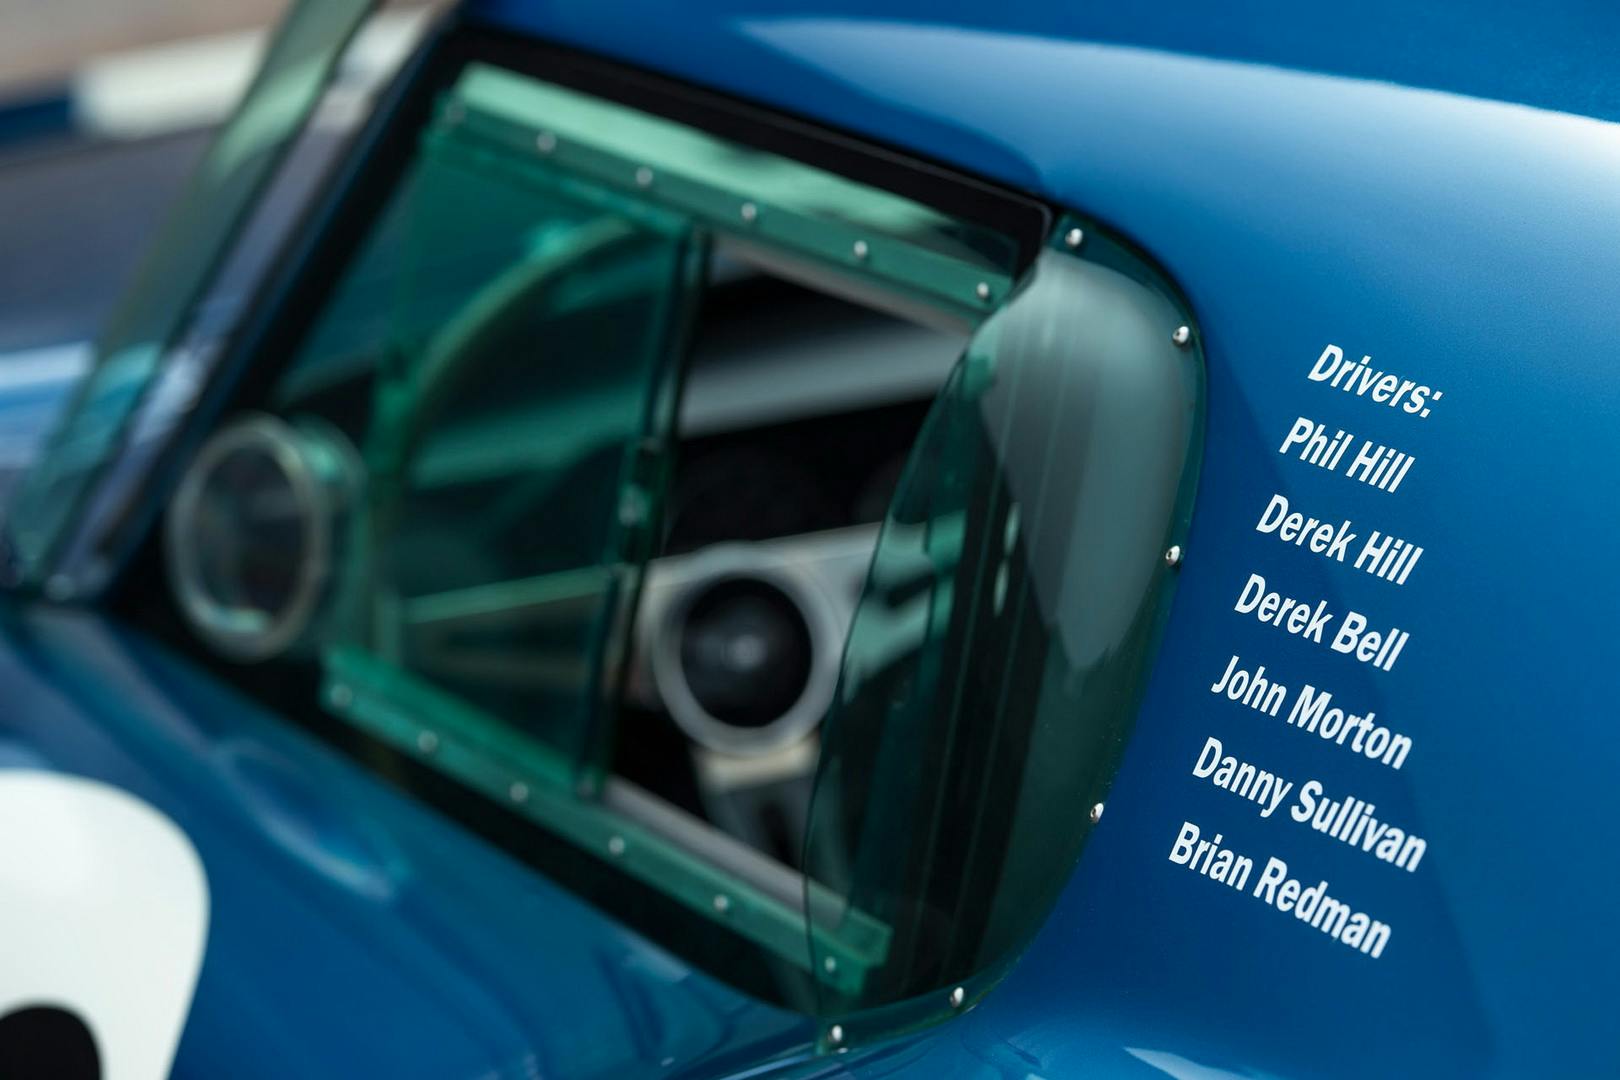 Shelby Cobra Daytona Coupe driver names detail